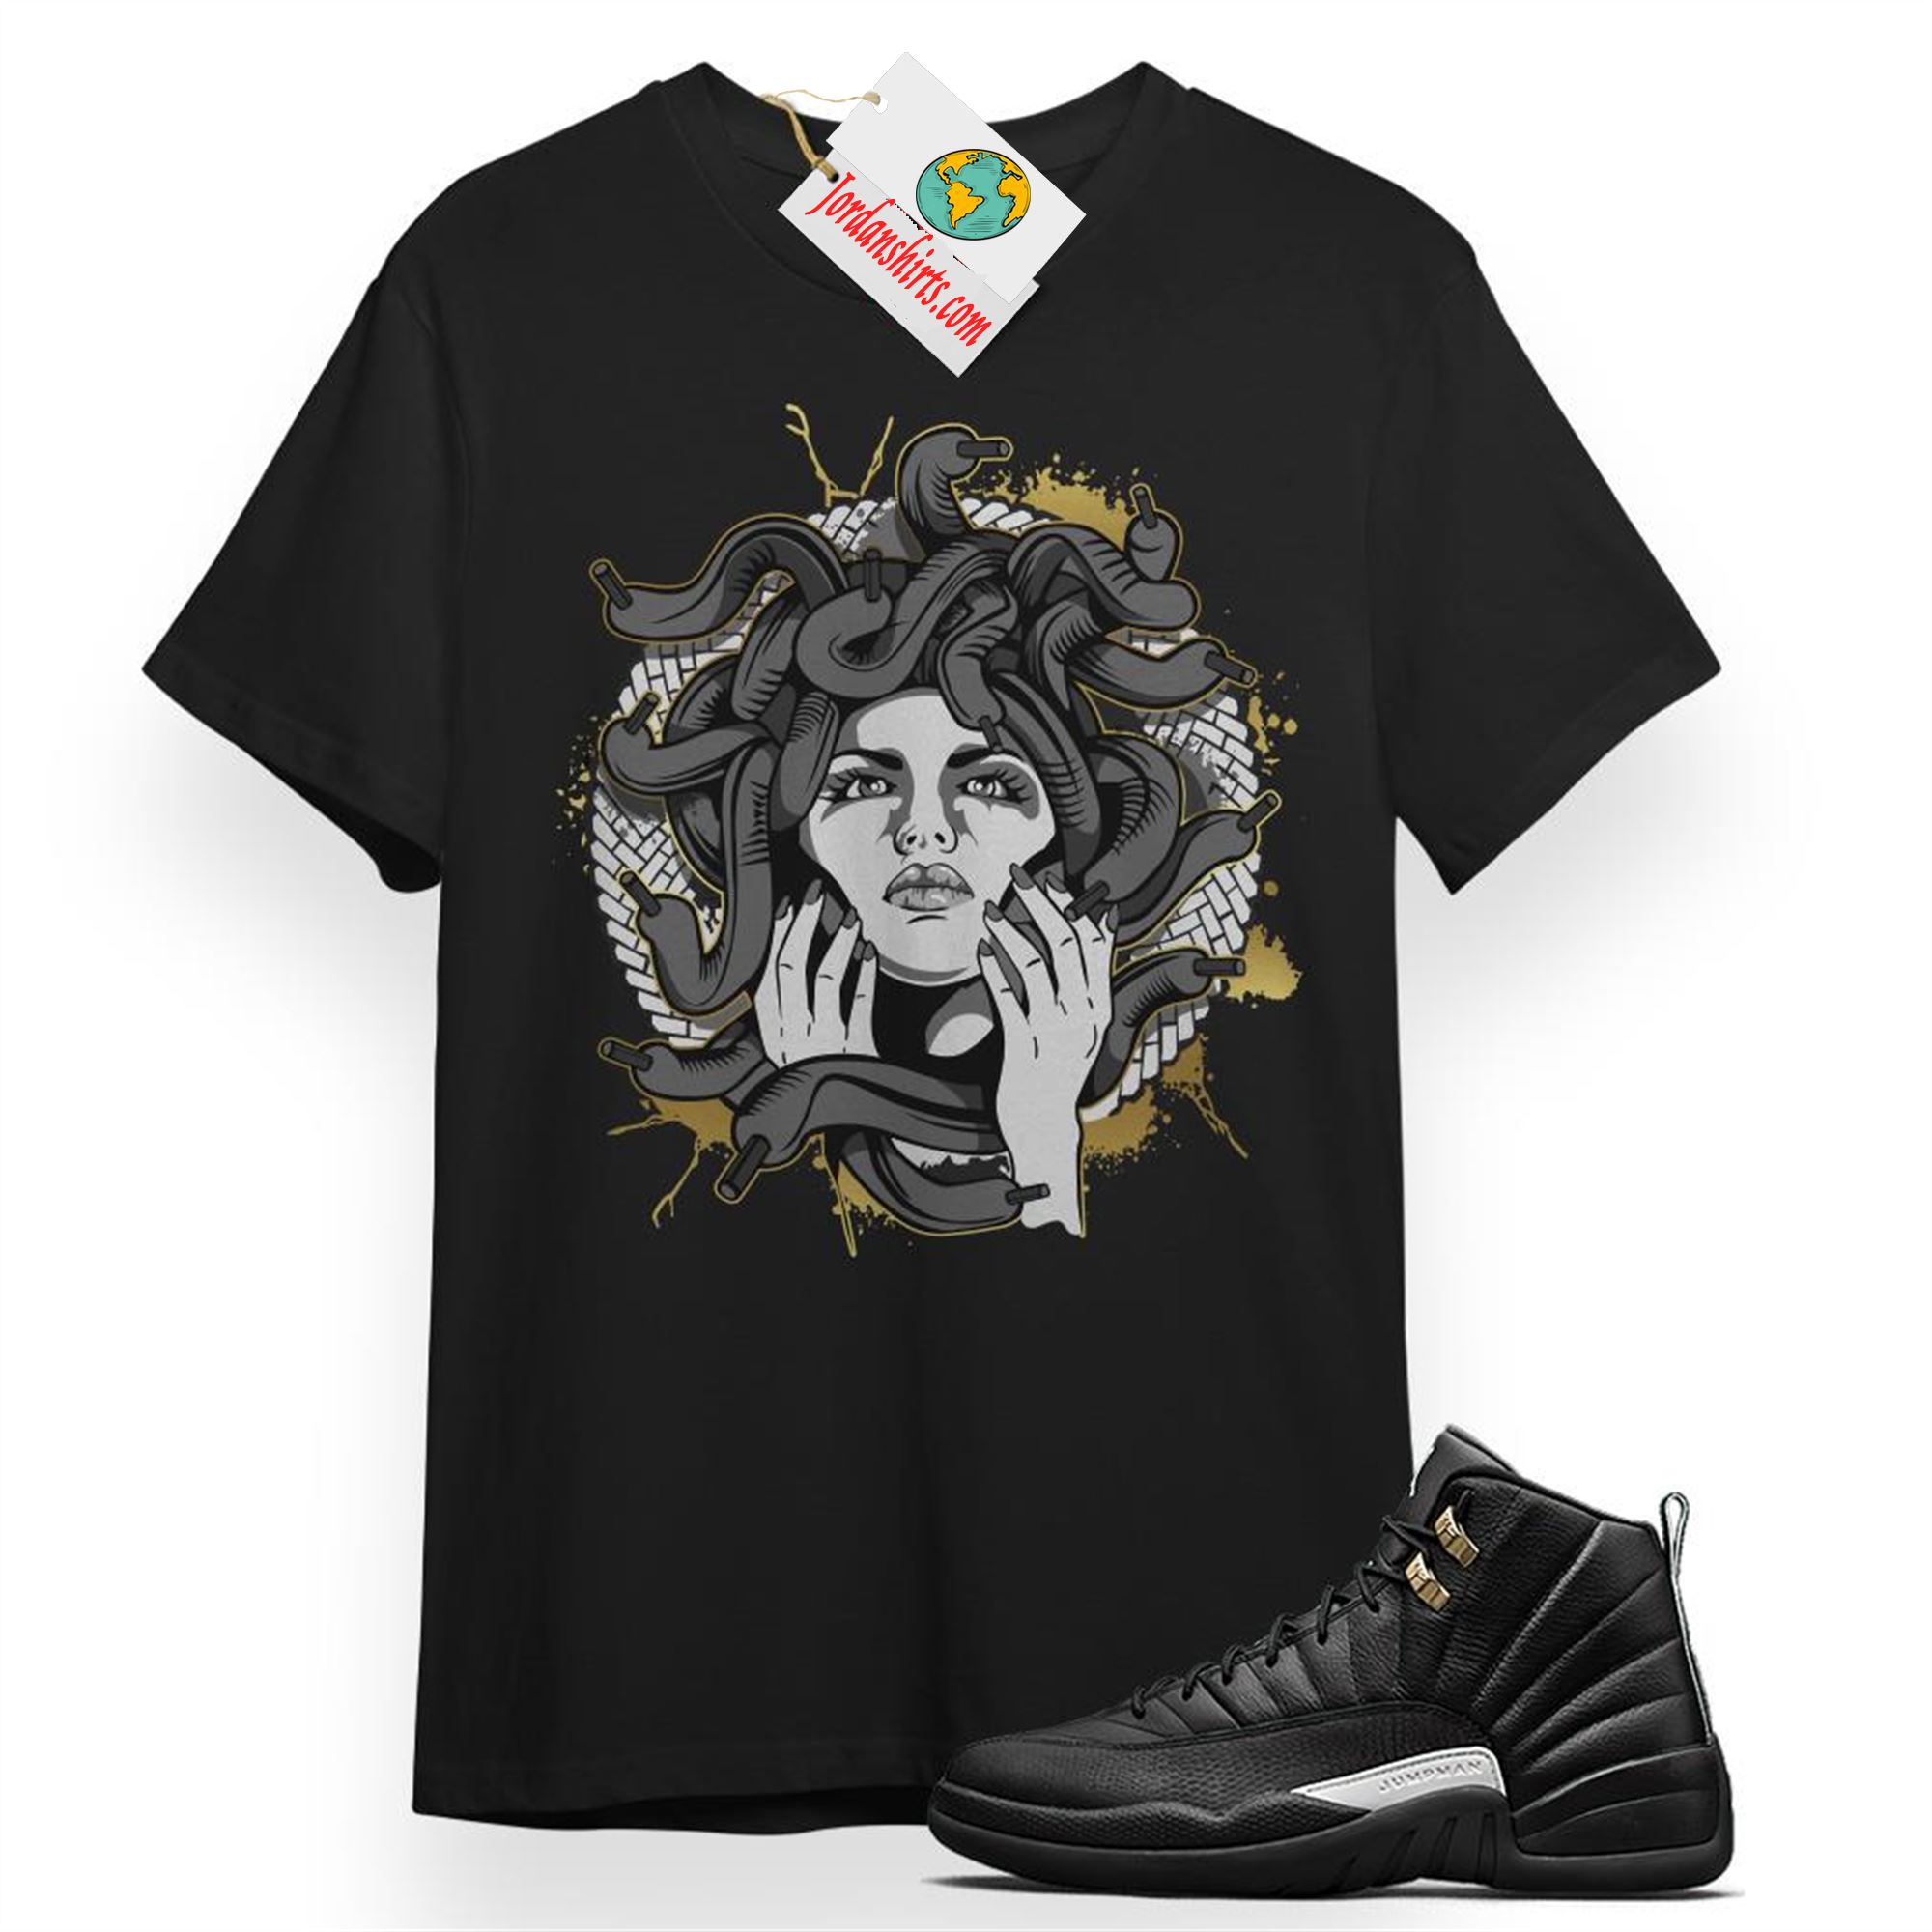 Jordan 12 Shirt, Medusa Black T-shirt Air Jordan 12 Master 12s Full Size Up To 5xl